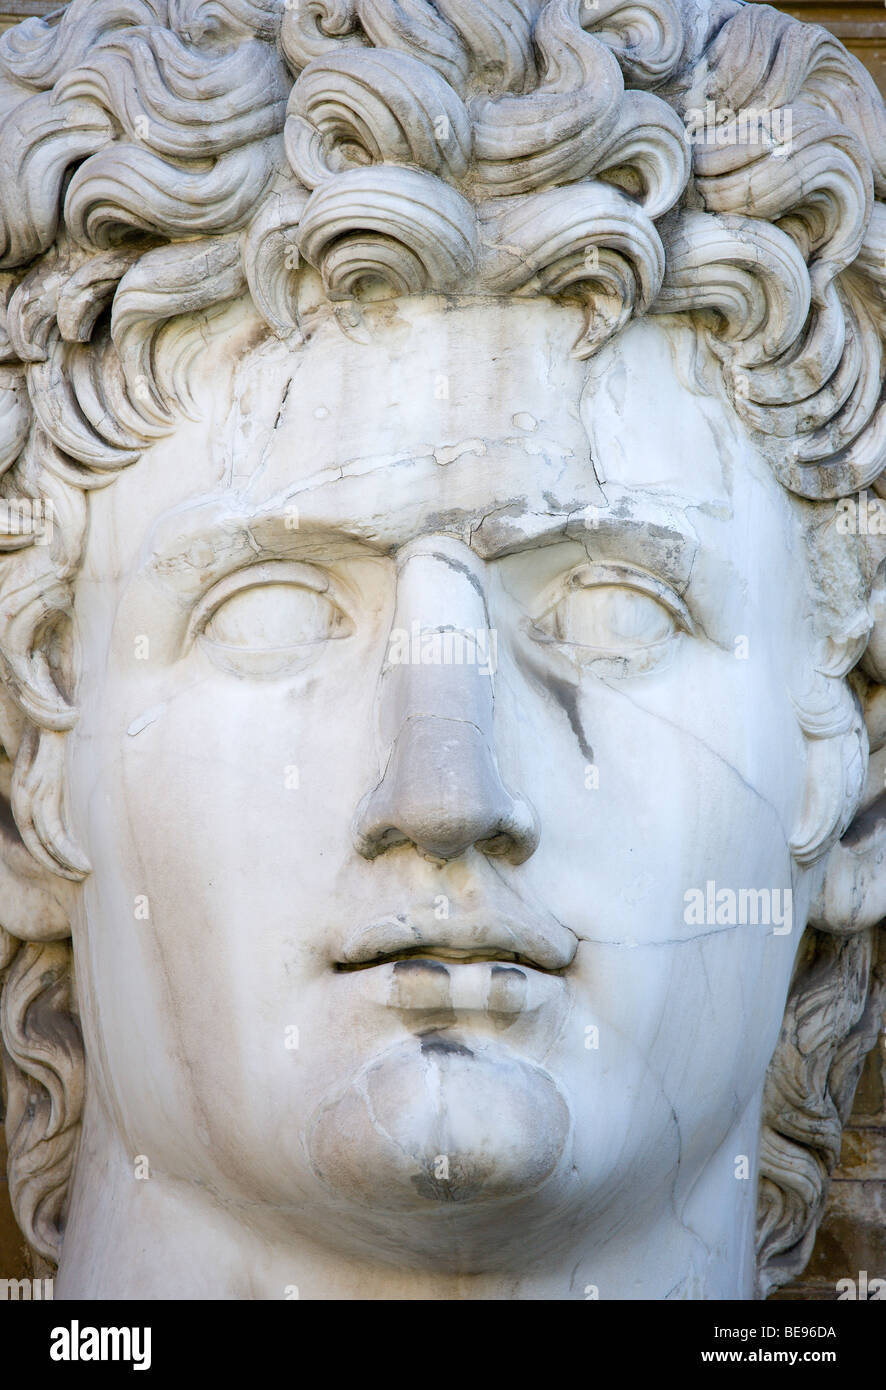 ITALY Rome Lazio Vatican City Museum Head and face detail of the marble statue of Caesar Augustus in the Cortile della Pigna Stock Photo